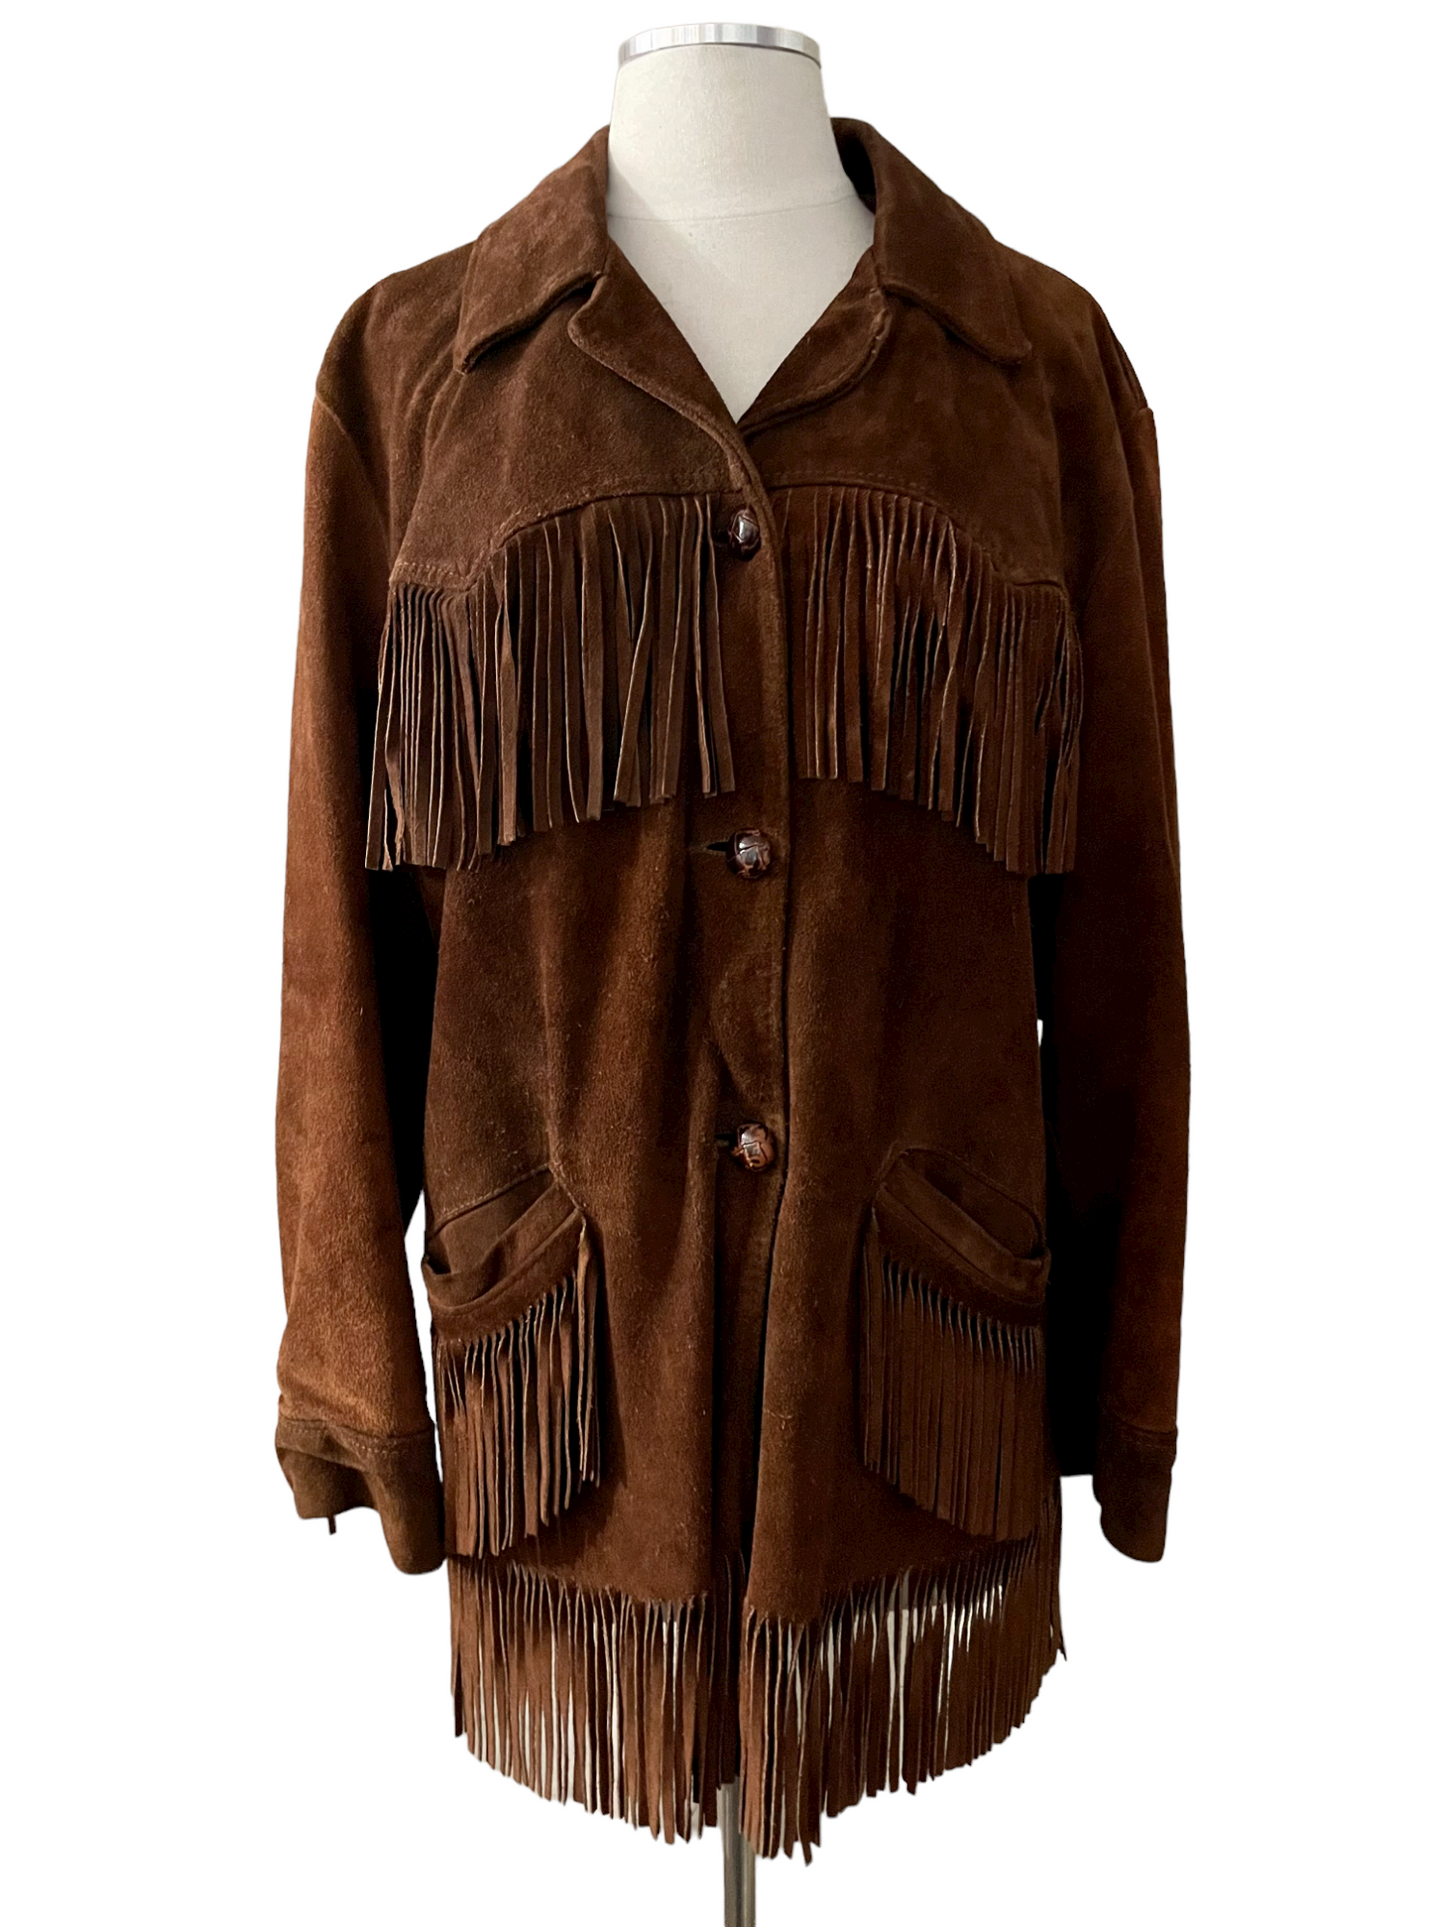 Vintage 1970s Sears Western Wear Fringe Suede Coat |Barn Owl Vintage | Seattle True Vintage